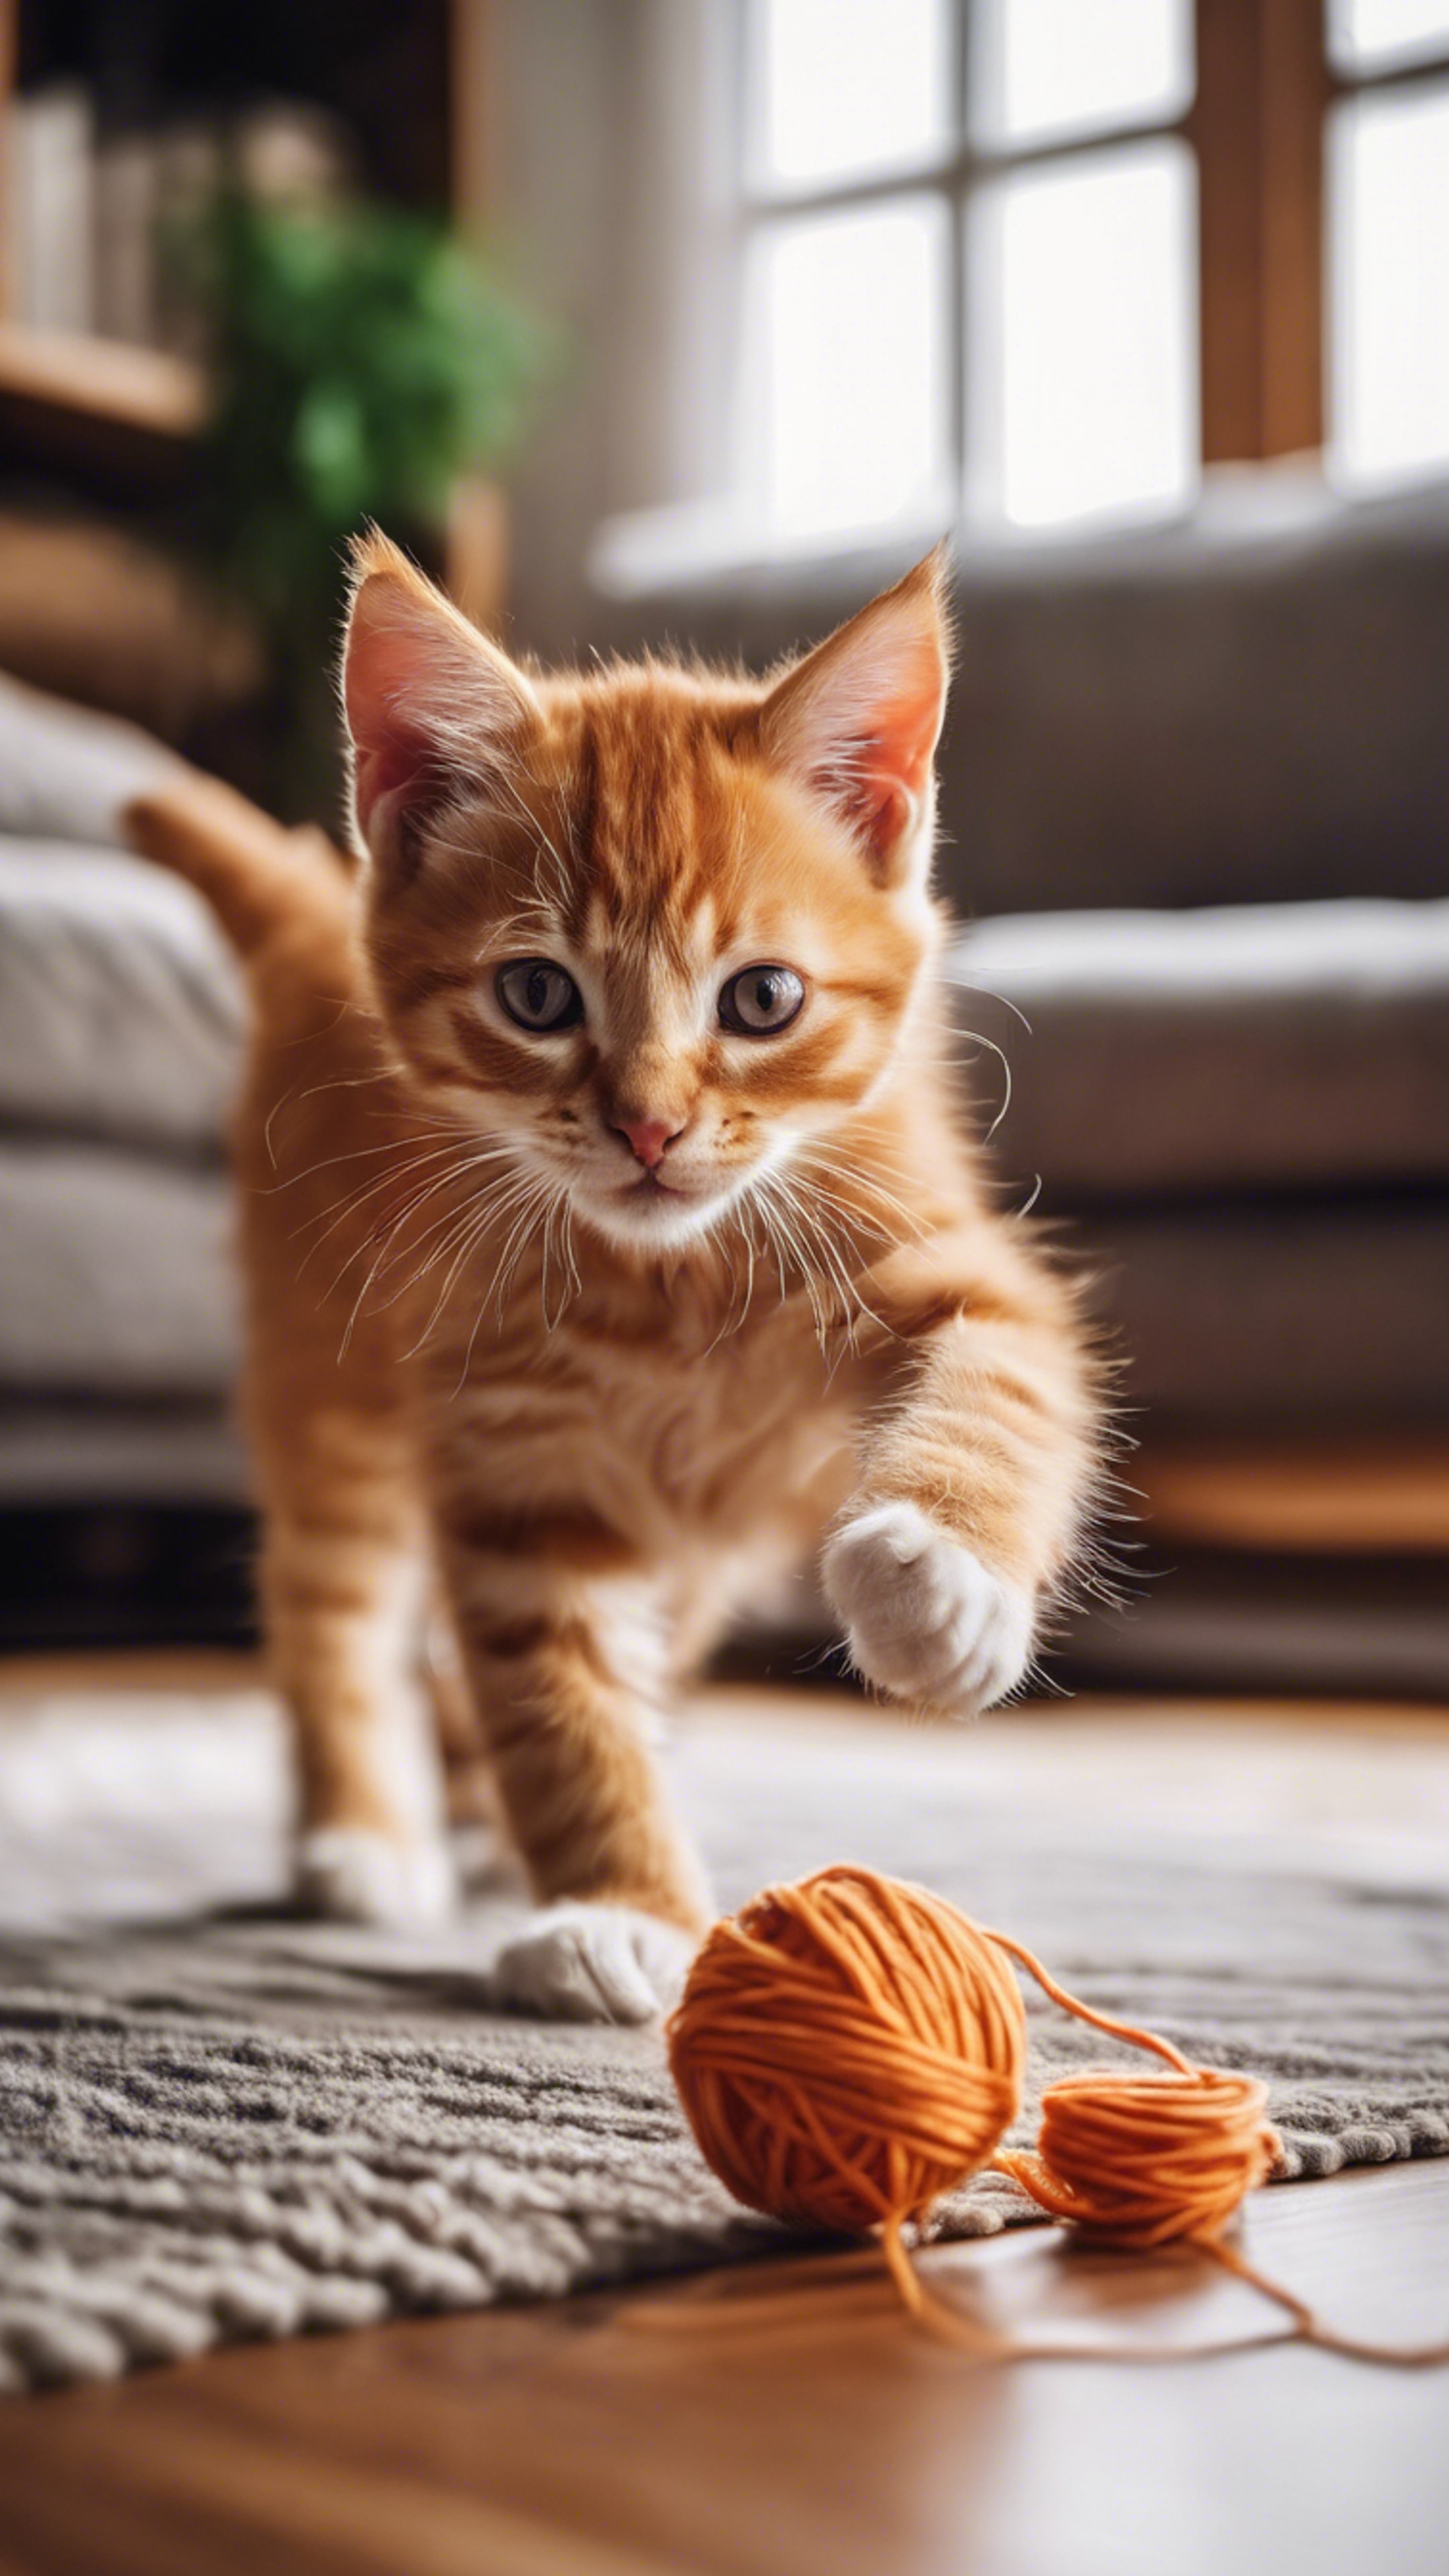 A playful orange tabby kitten, chasing a ball of yarn in a cozy wooden living room. Дэлгэцийн зураг[48ba56b3f1554d3caaed]